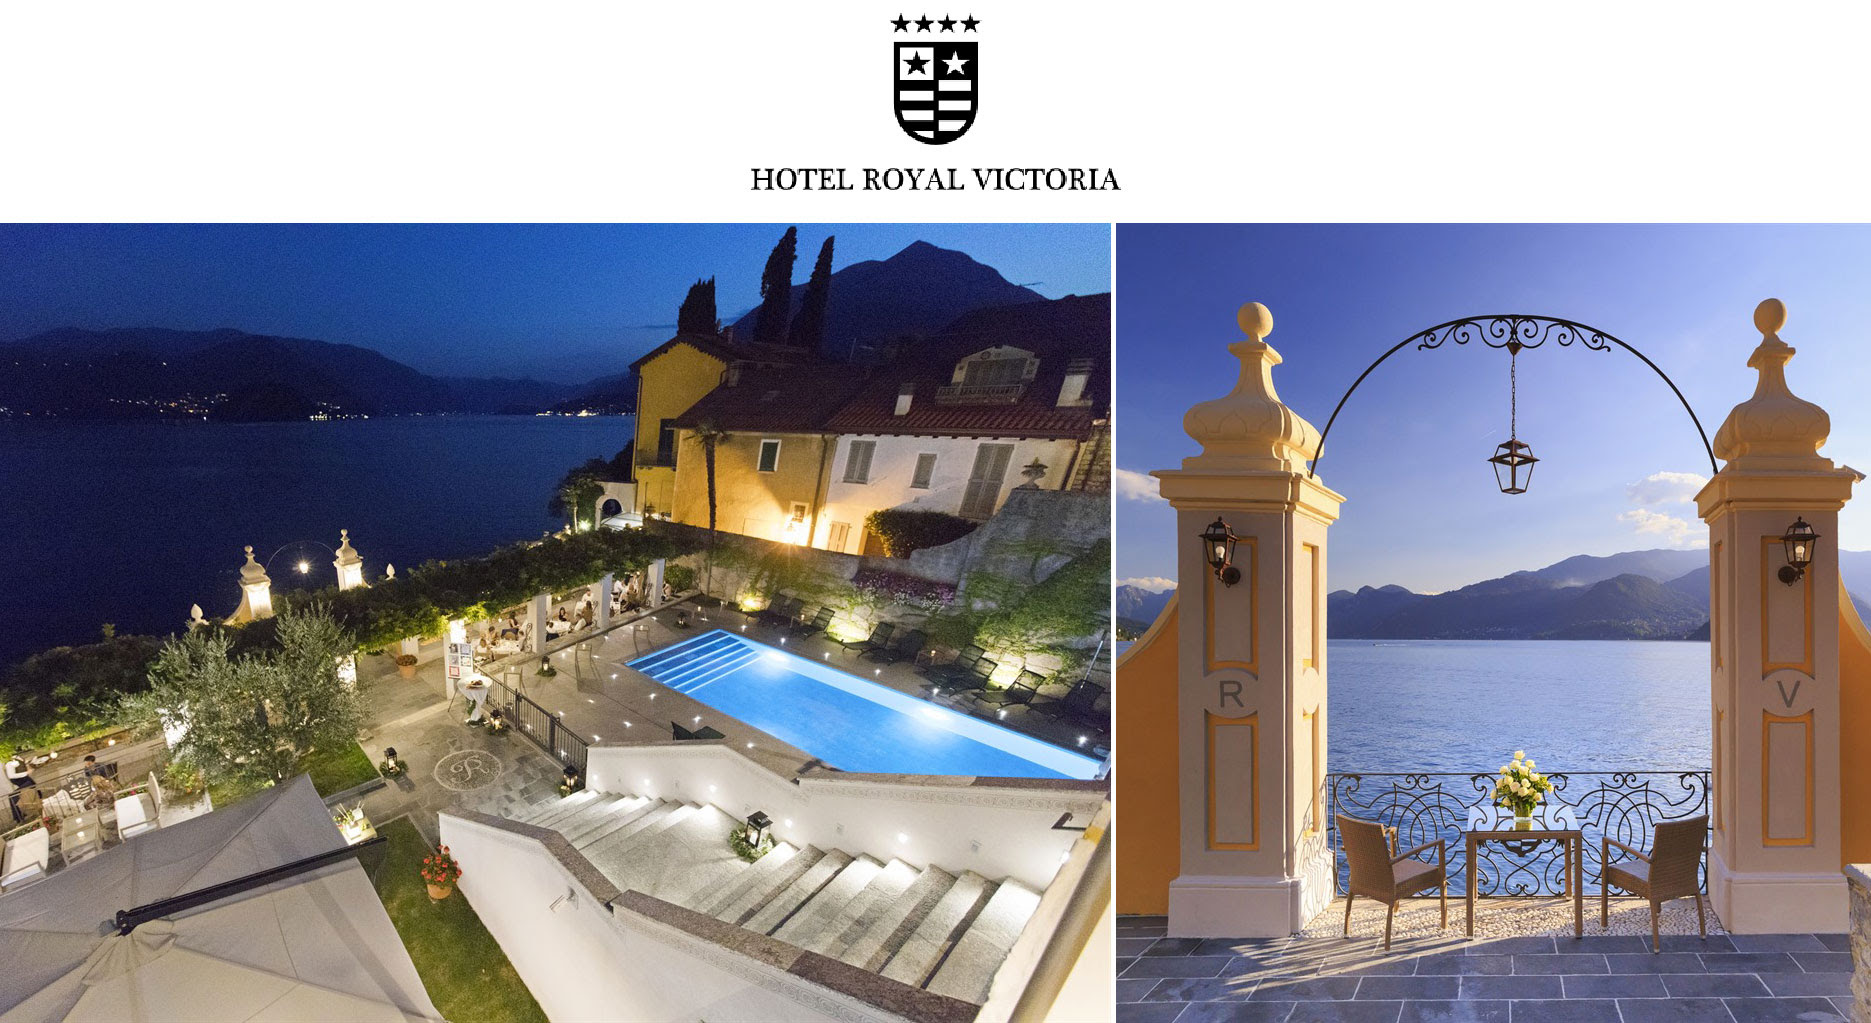 Lago di Como. Varenna.
Hotel Royal Victoria